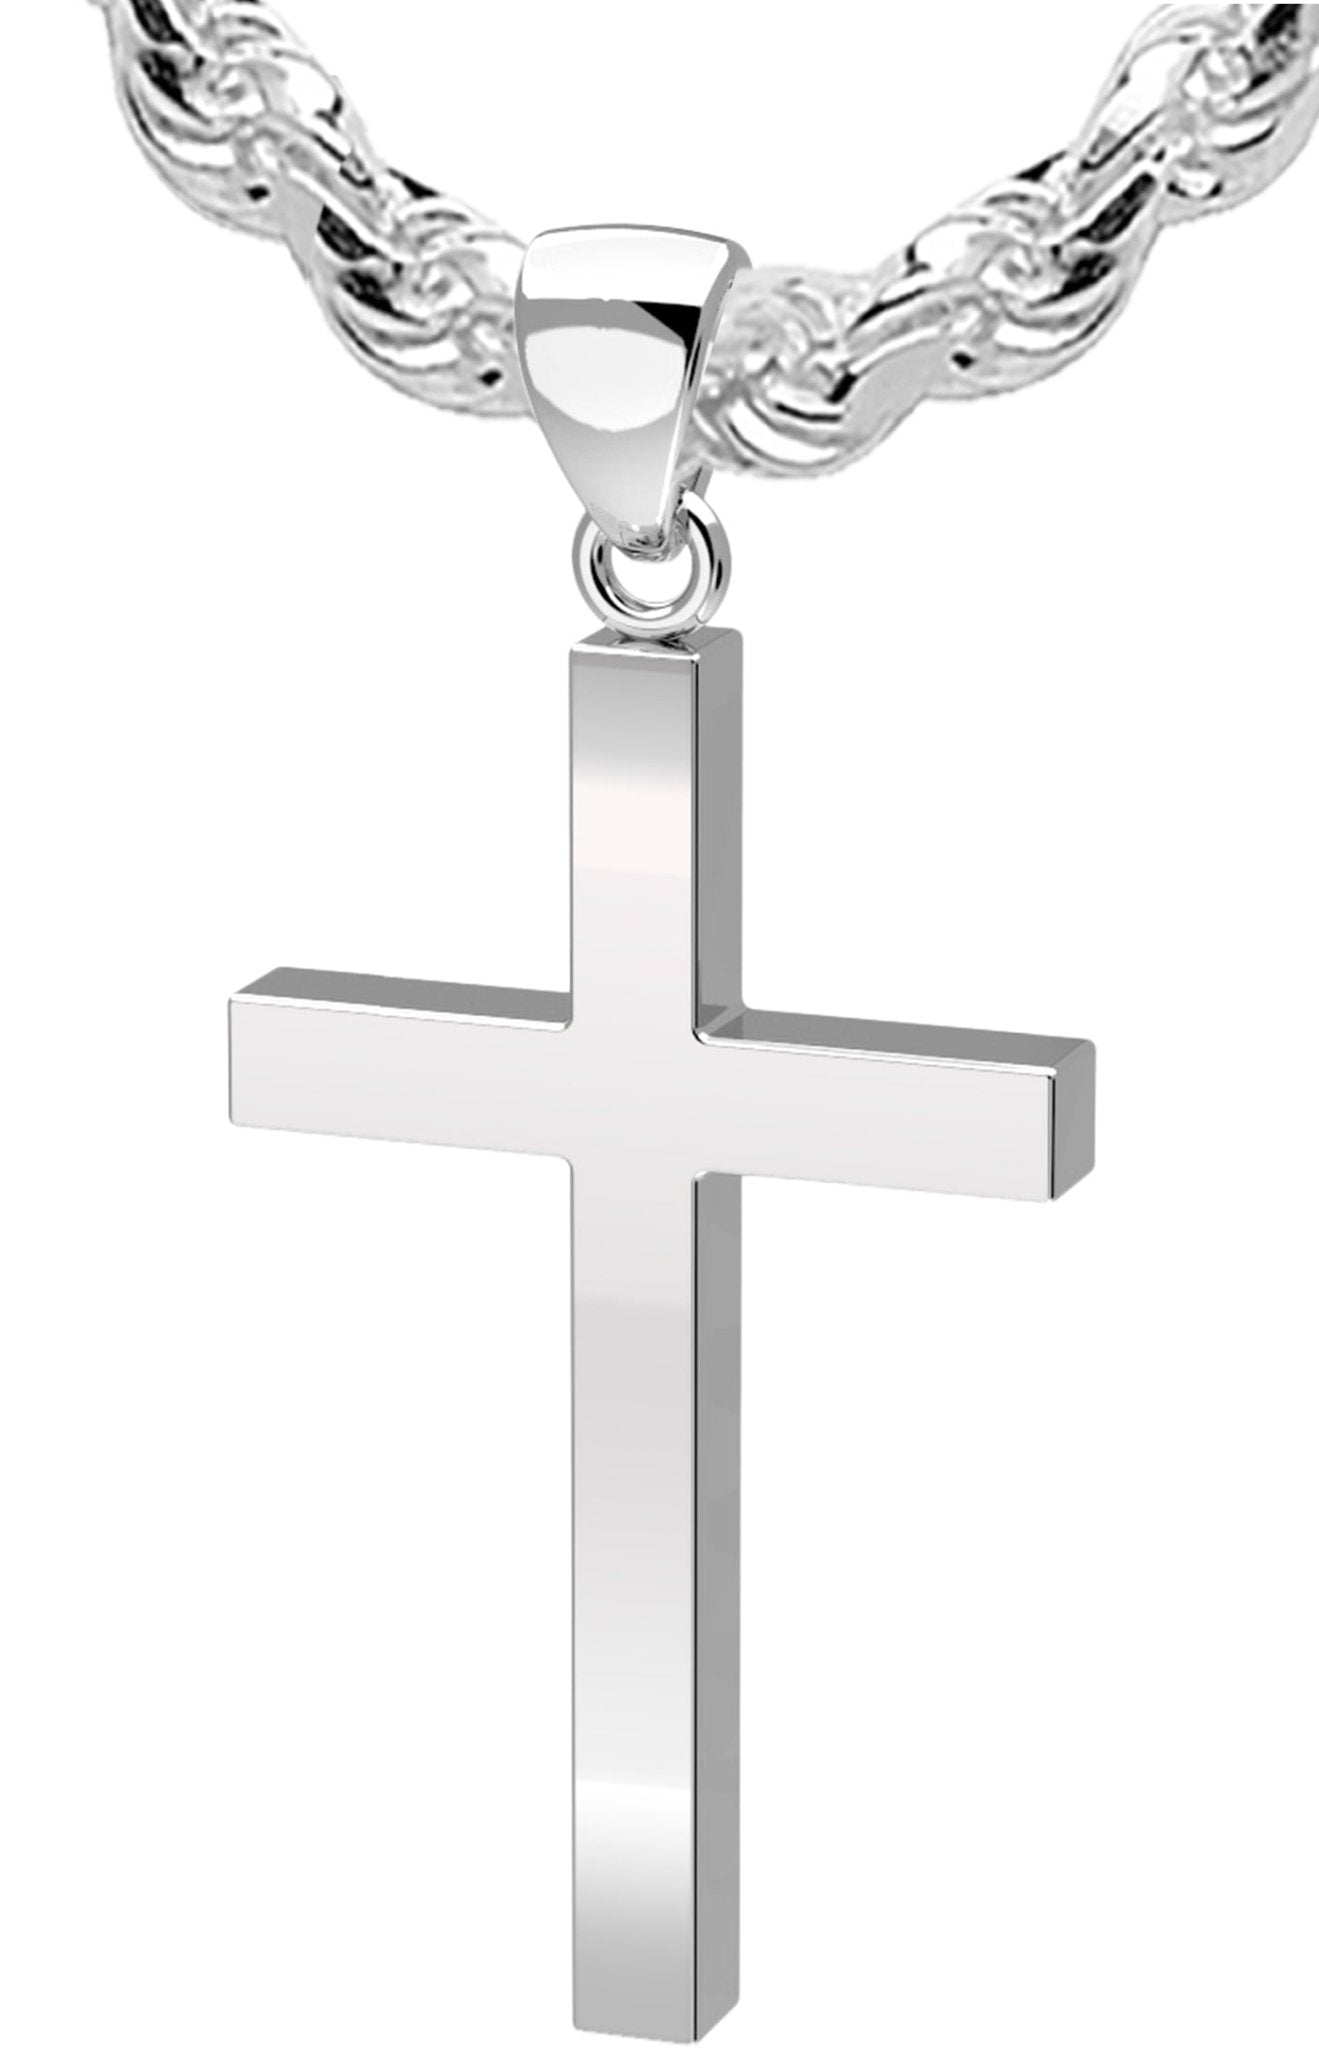 M Men Style Jesus Crucifix Cross Necklace Religious INRI Cross with 24